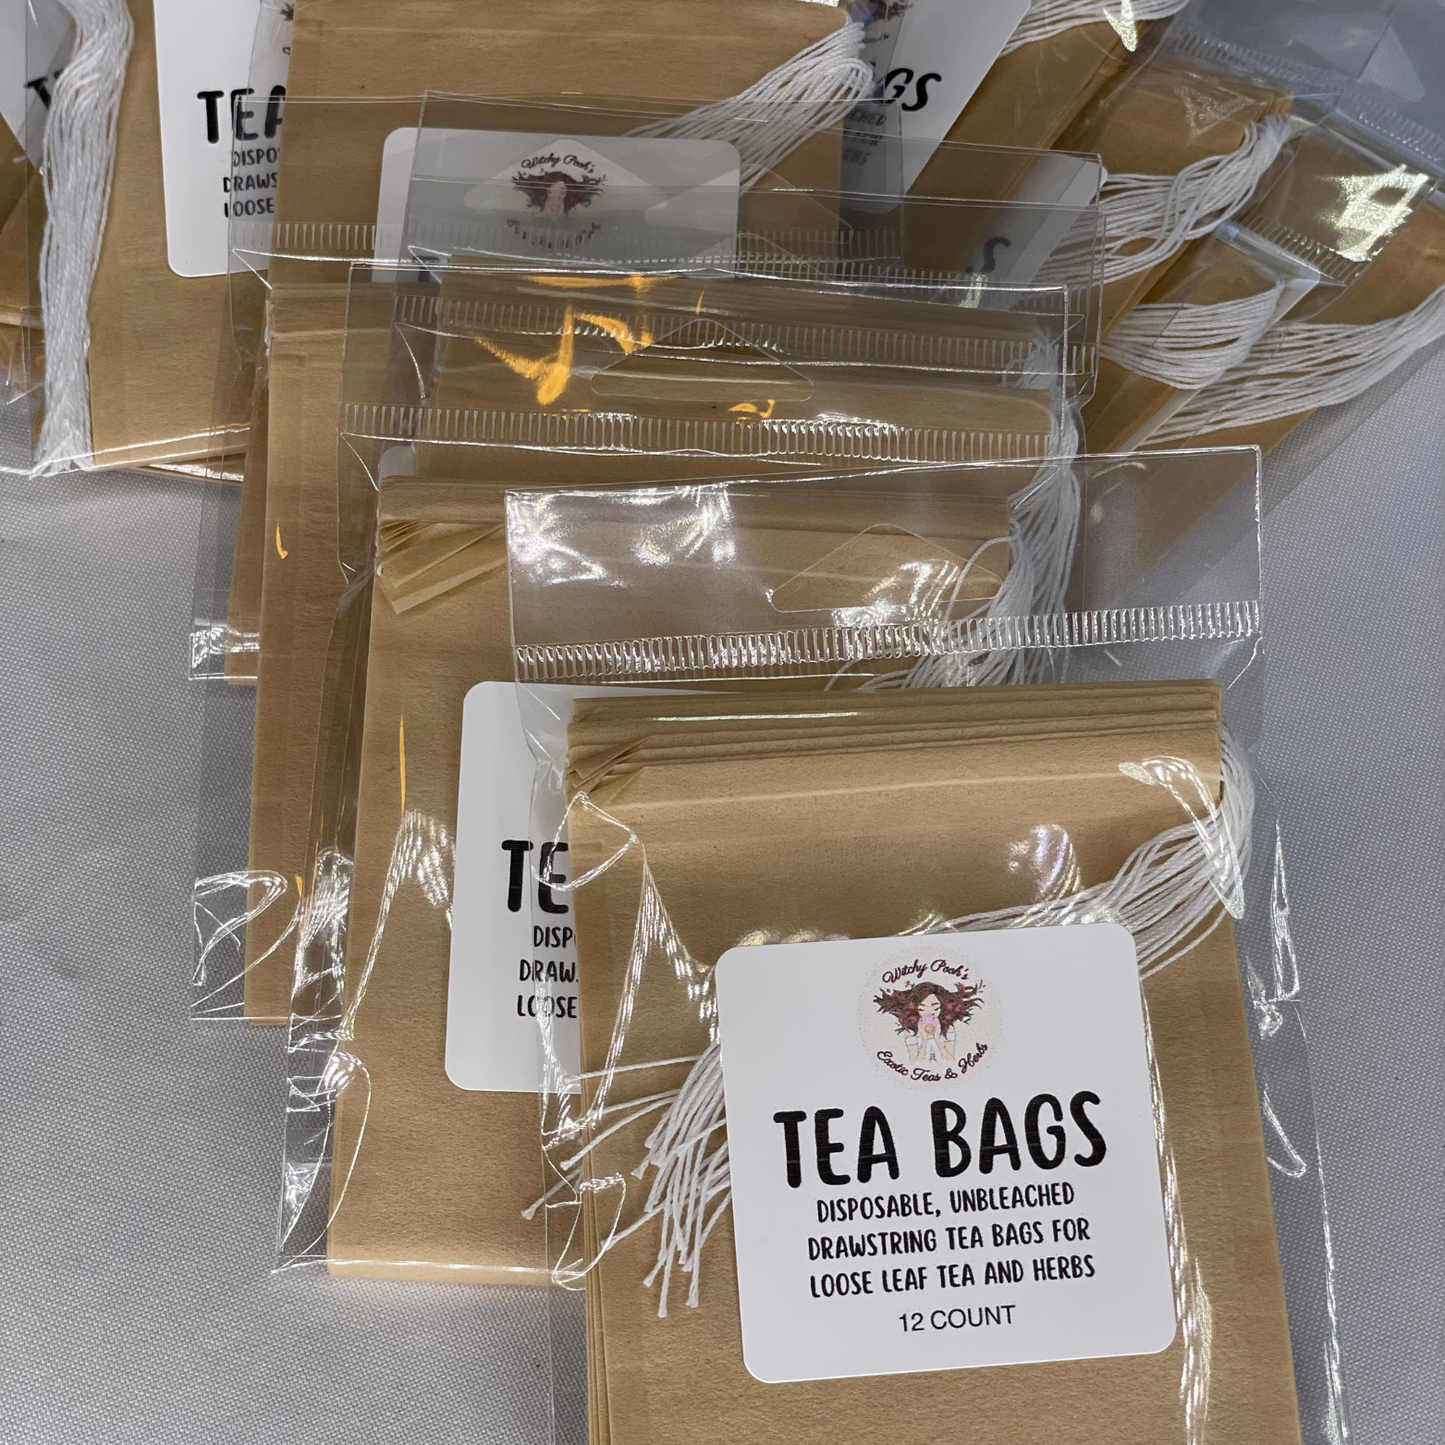 Tea Bags for Loose Leaf Tea, 12 pack, Filtered, Disposable, Drawstring